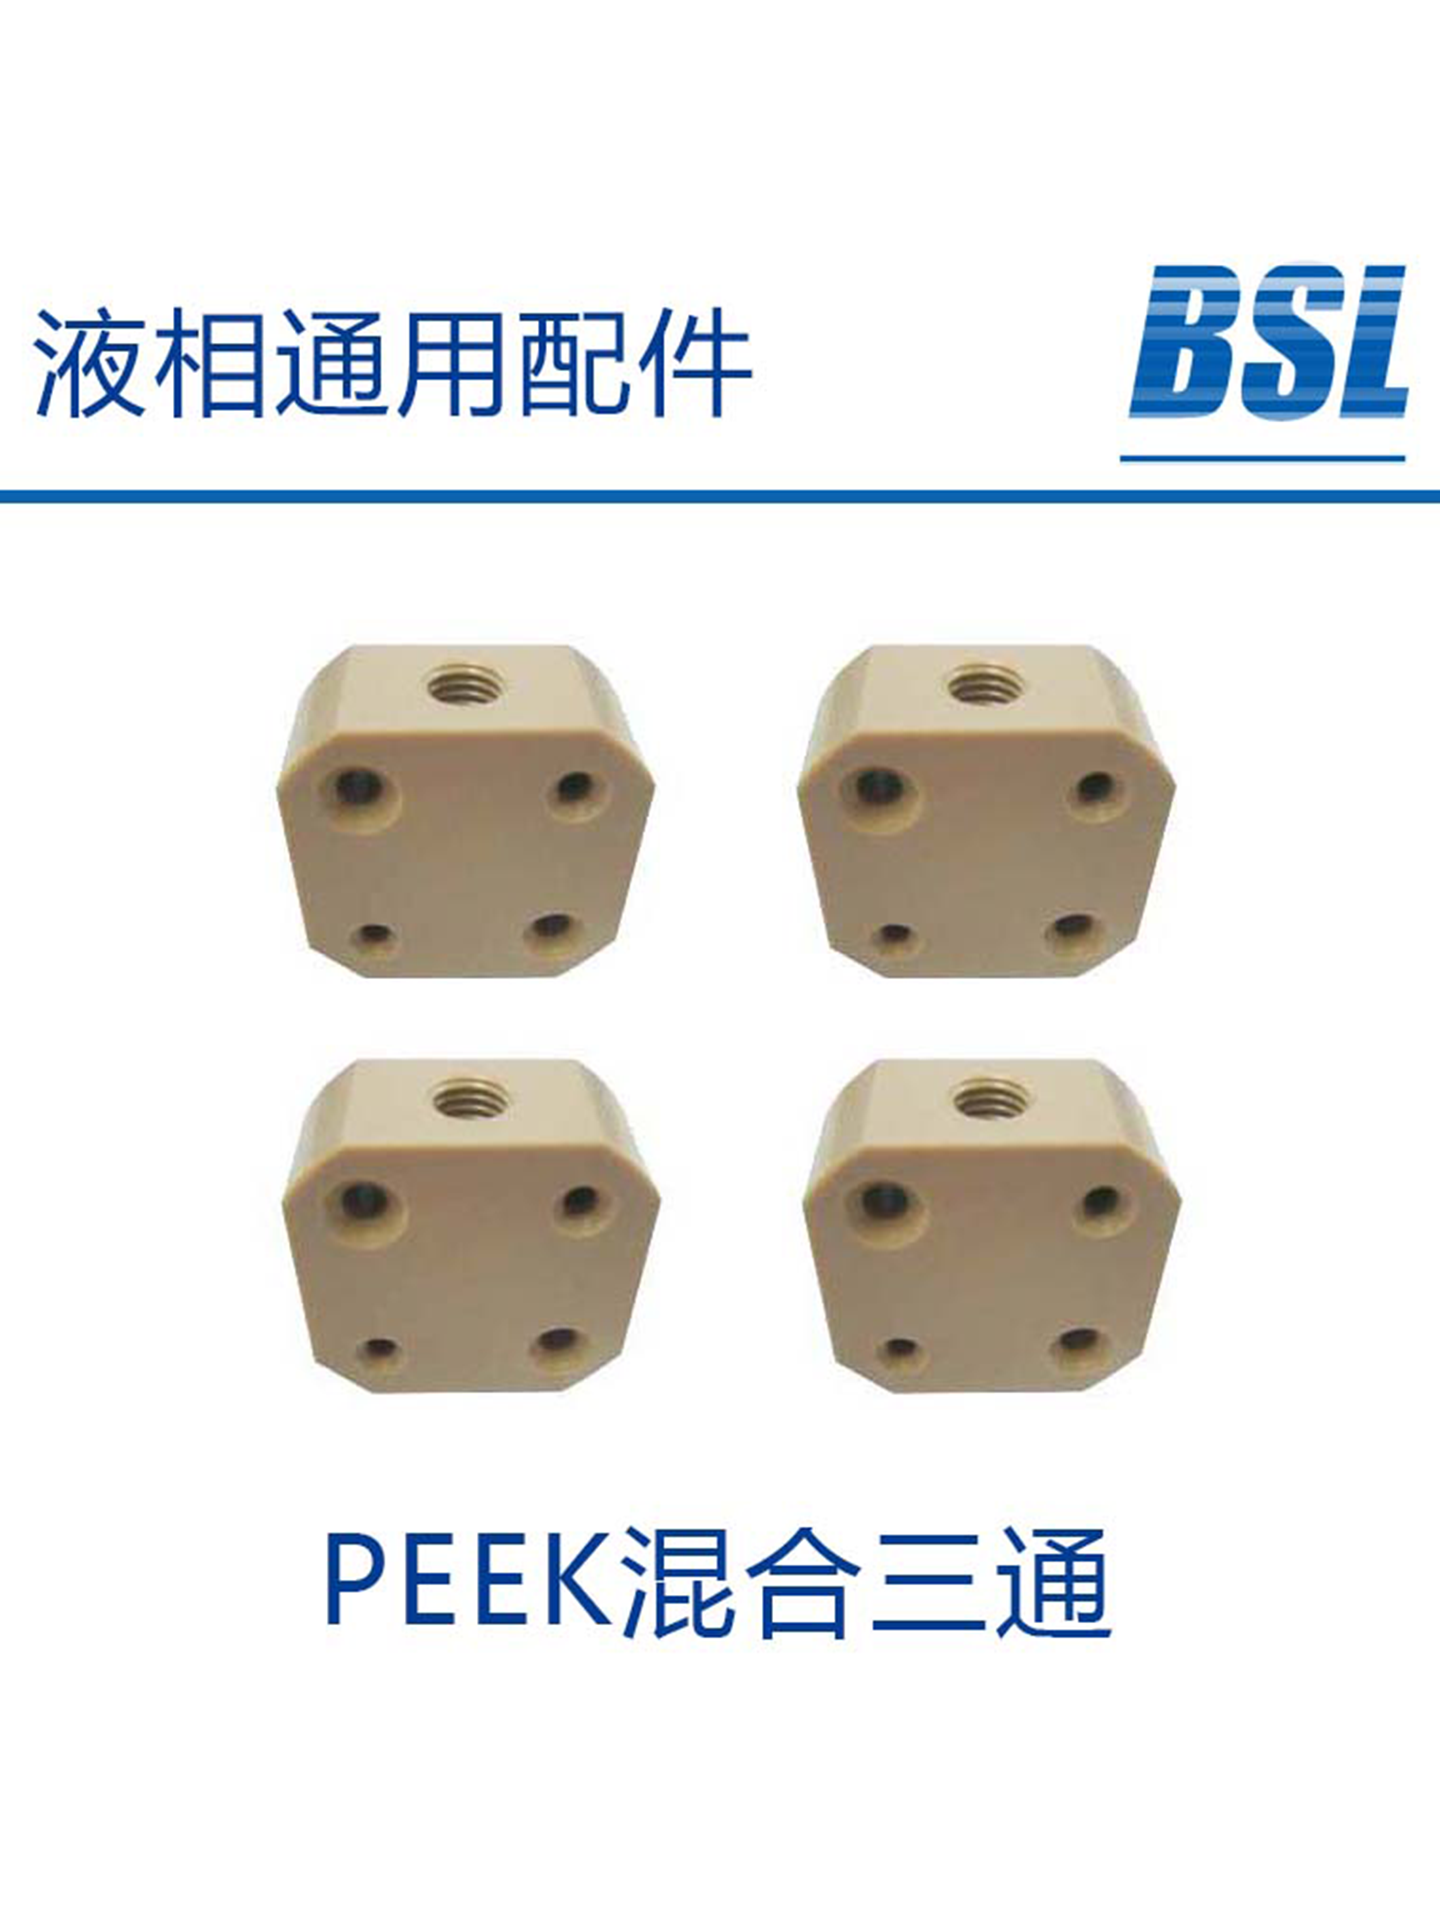 PEEK三通及接头 刃环 液相通用配件 可定制